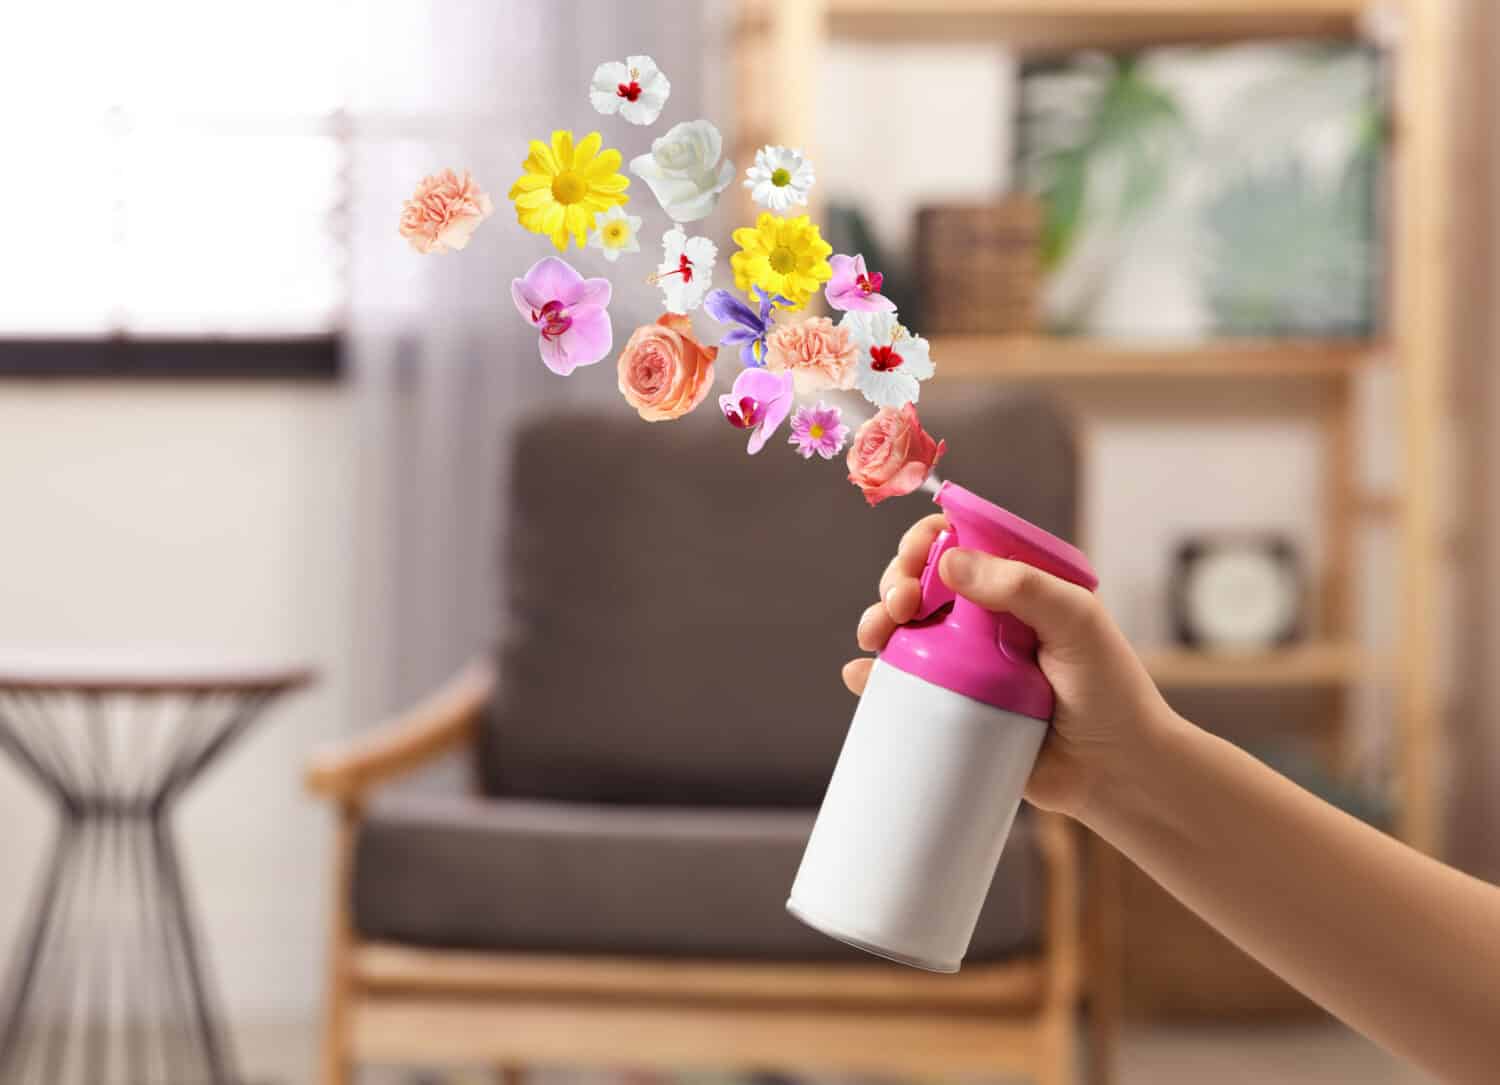 Woman spraying air freshener at home, closeup. Flowered aroma